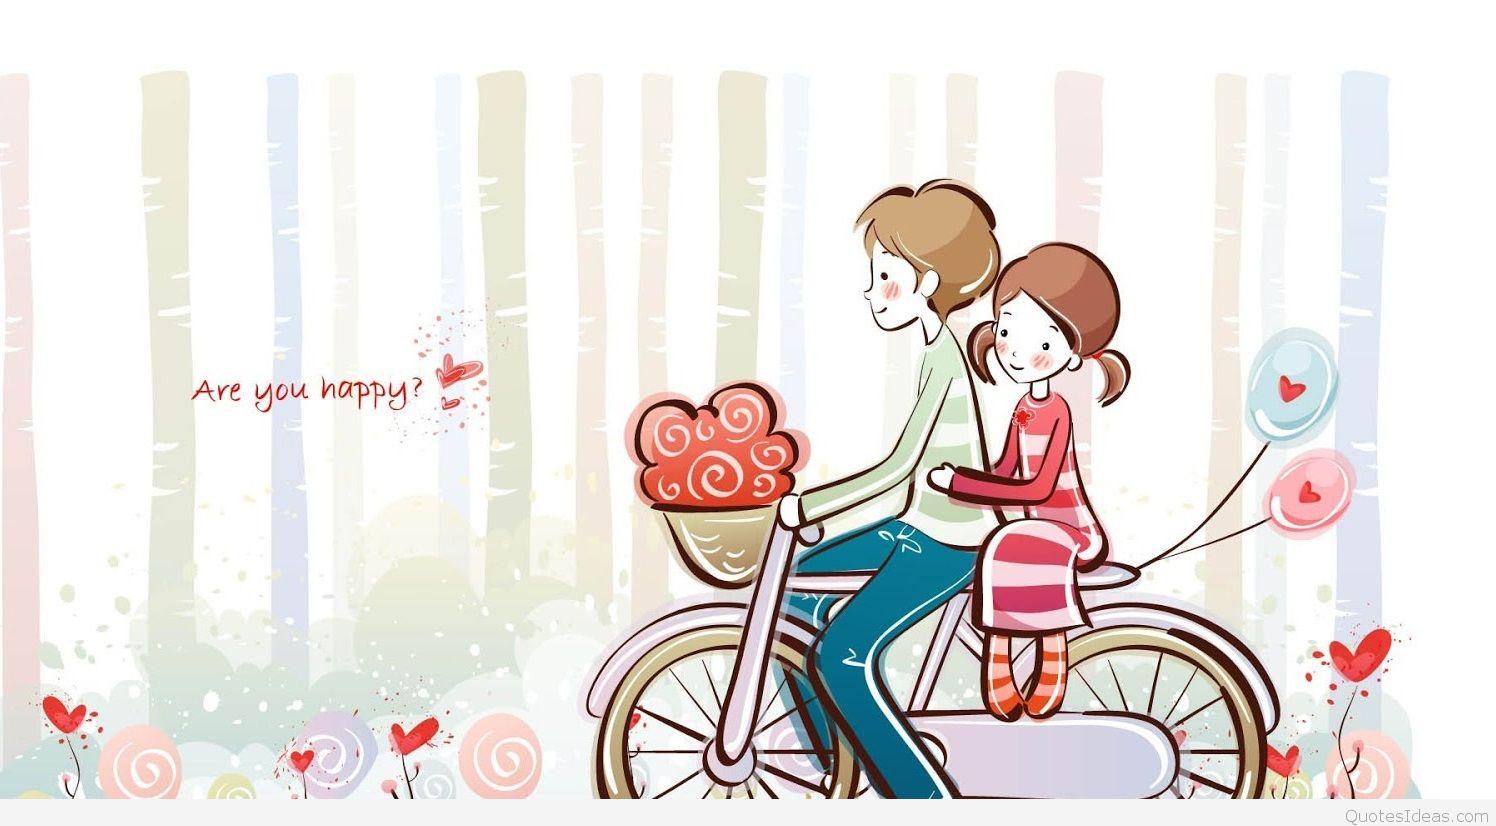 Happy Valentine's day love pics, cartoons, wishes 2016